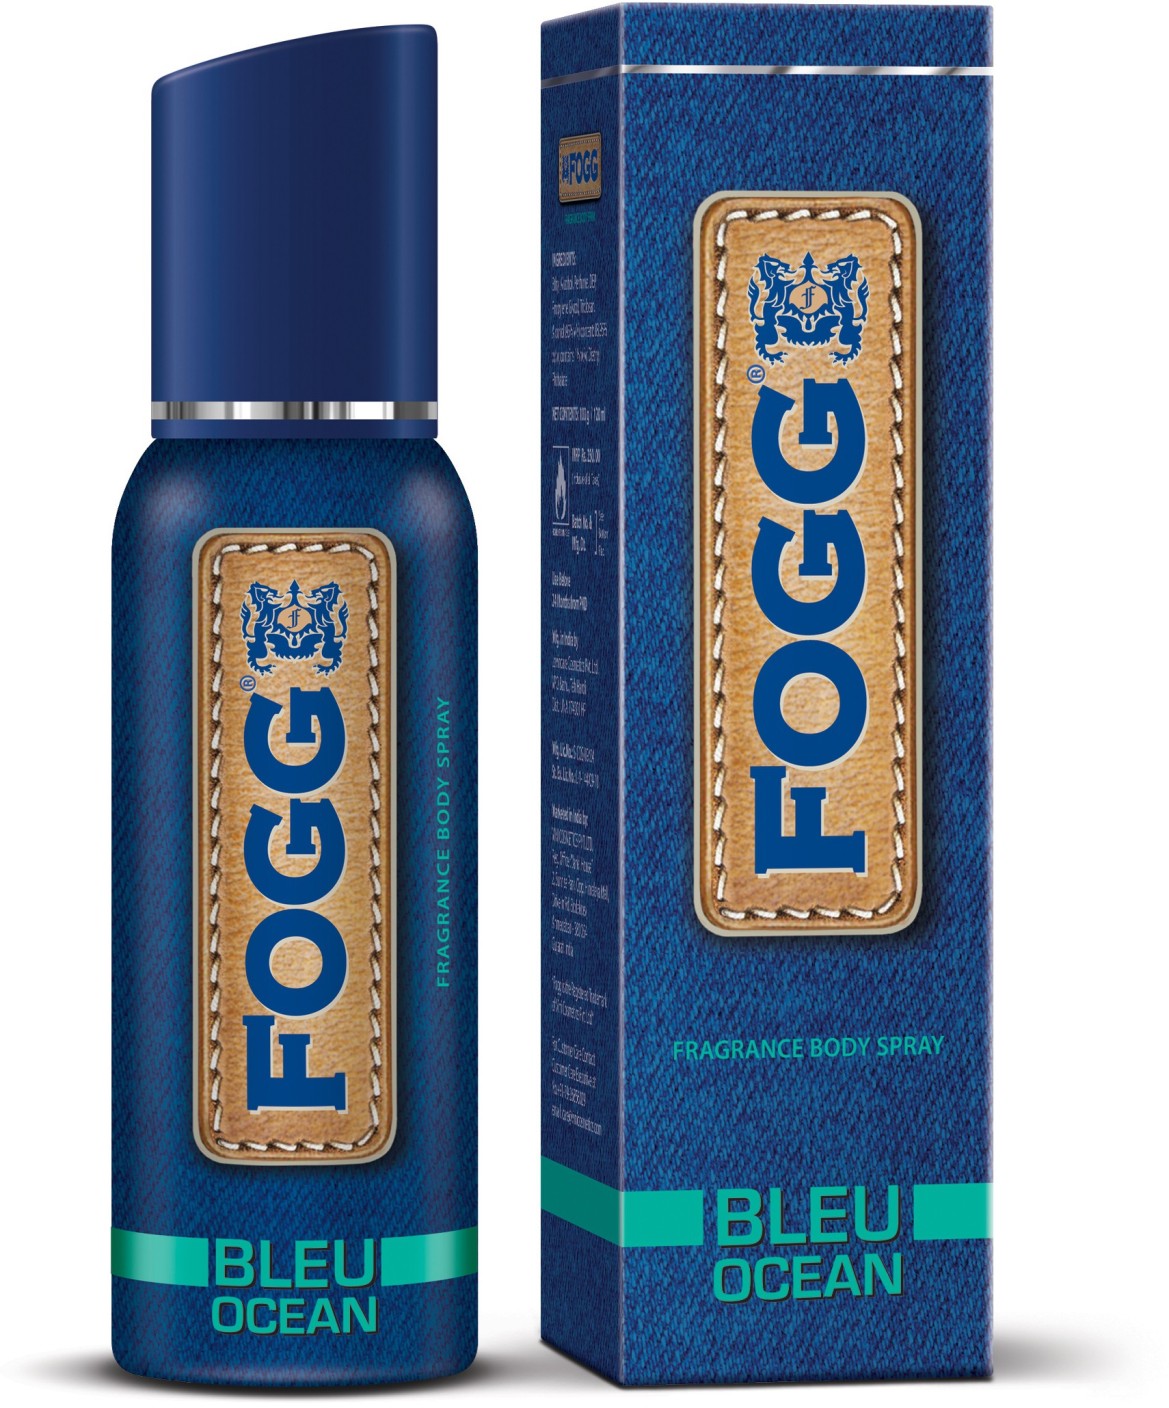 Fogg Bleu Ocean Body Spray For Men Price in India